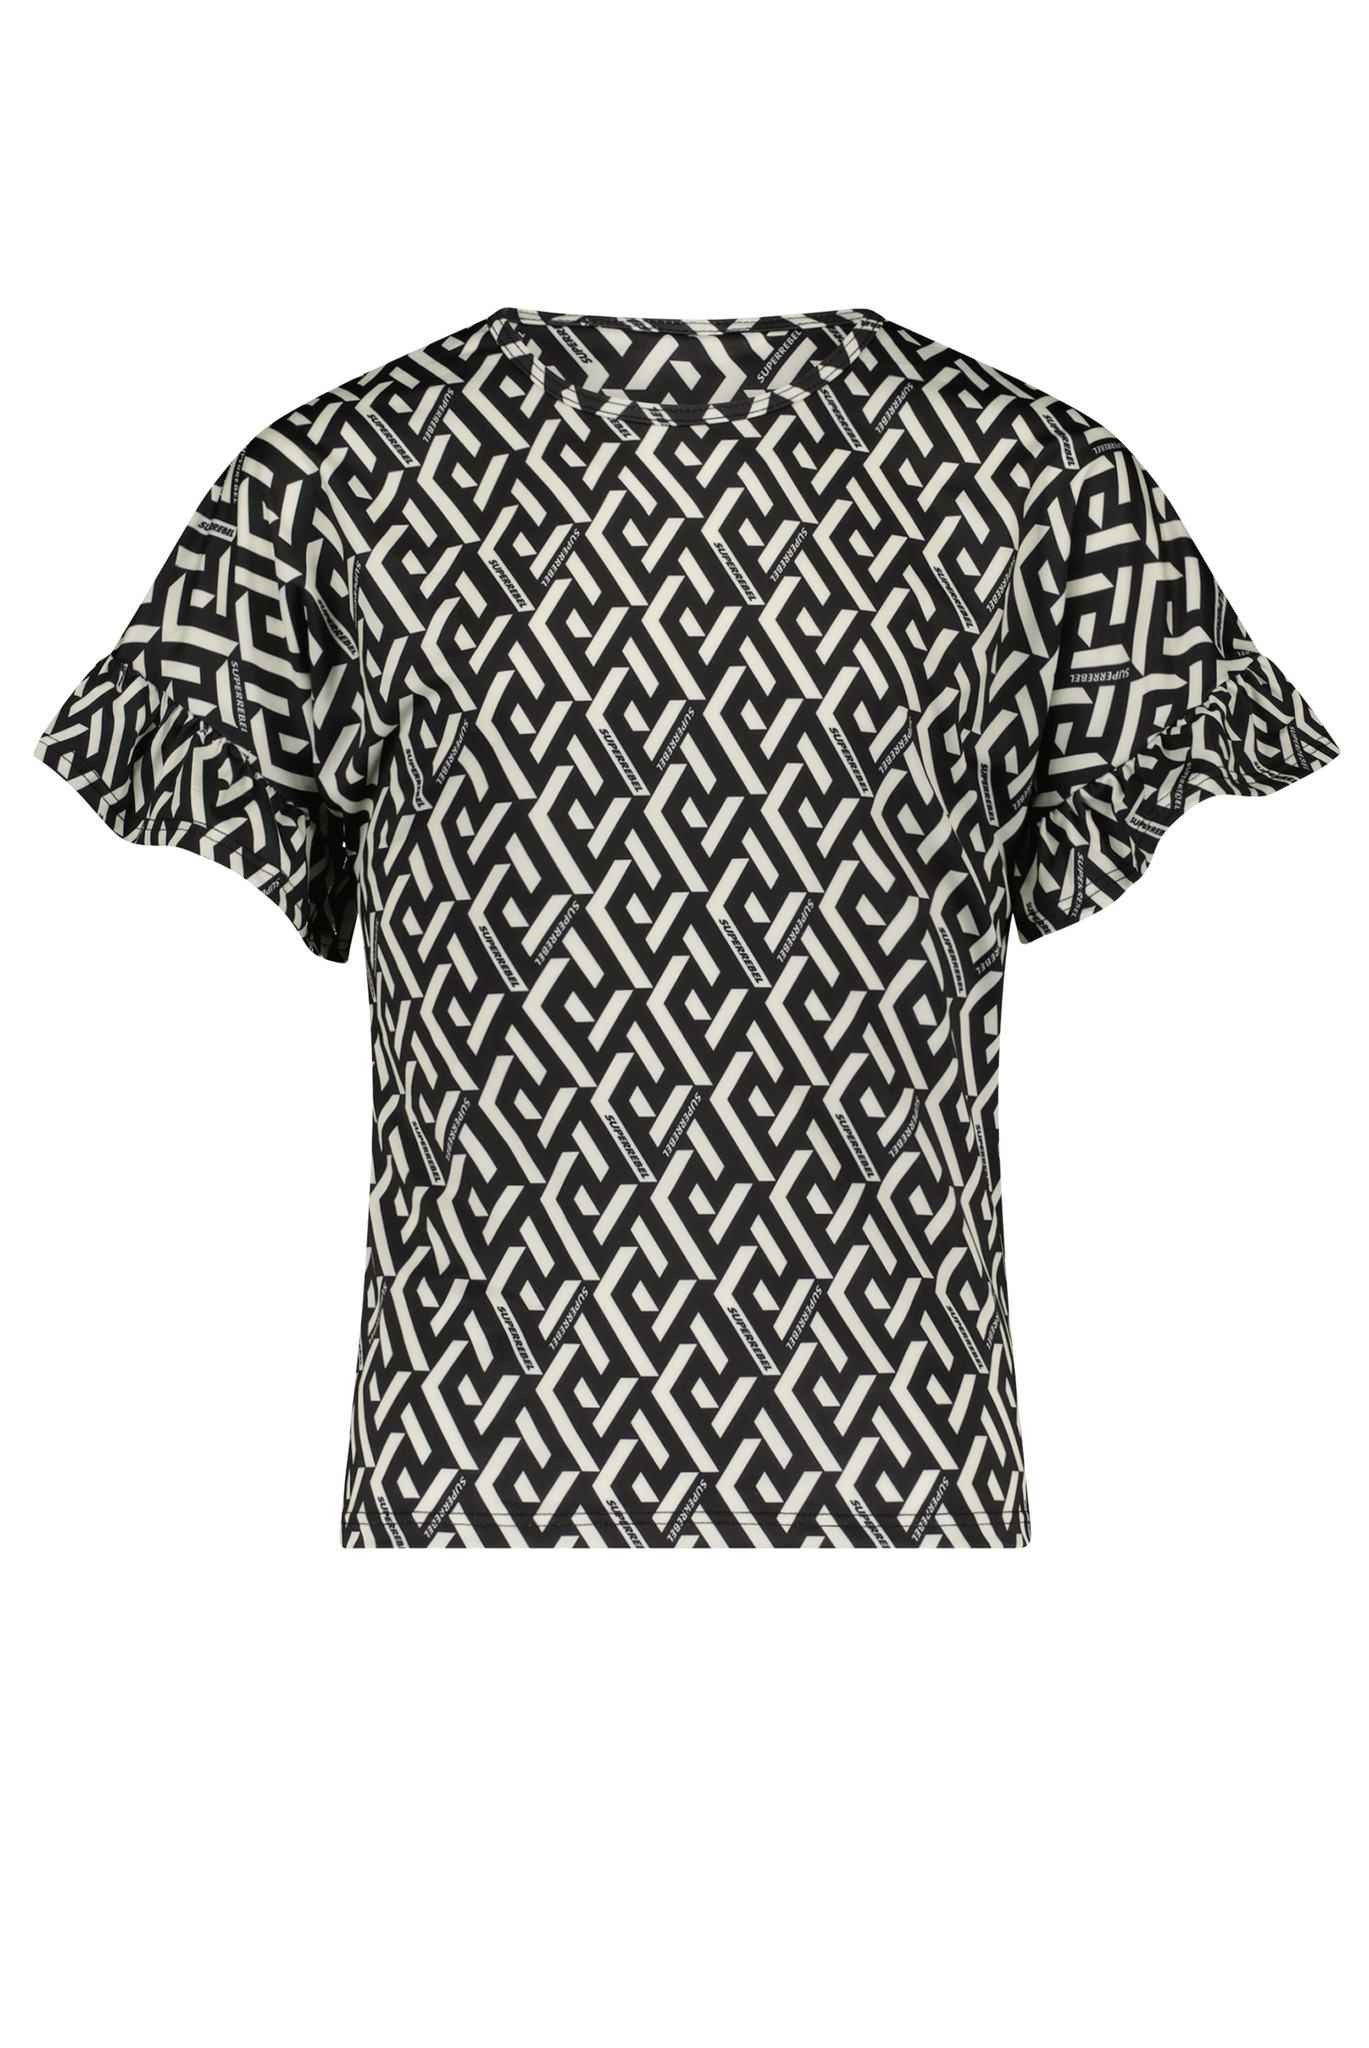 SUPERREBEL Jongens t-shirt - Benica - Zwart grafisch AOP